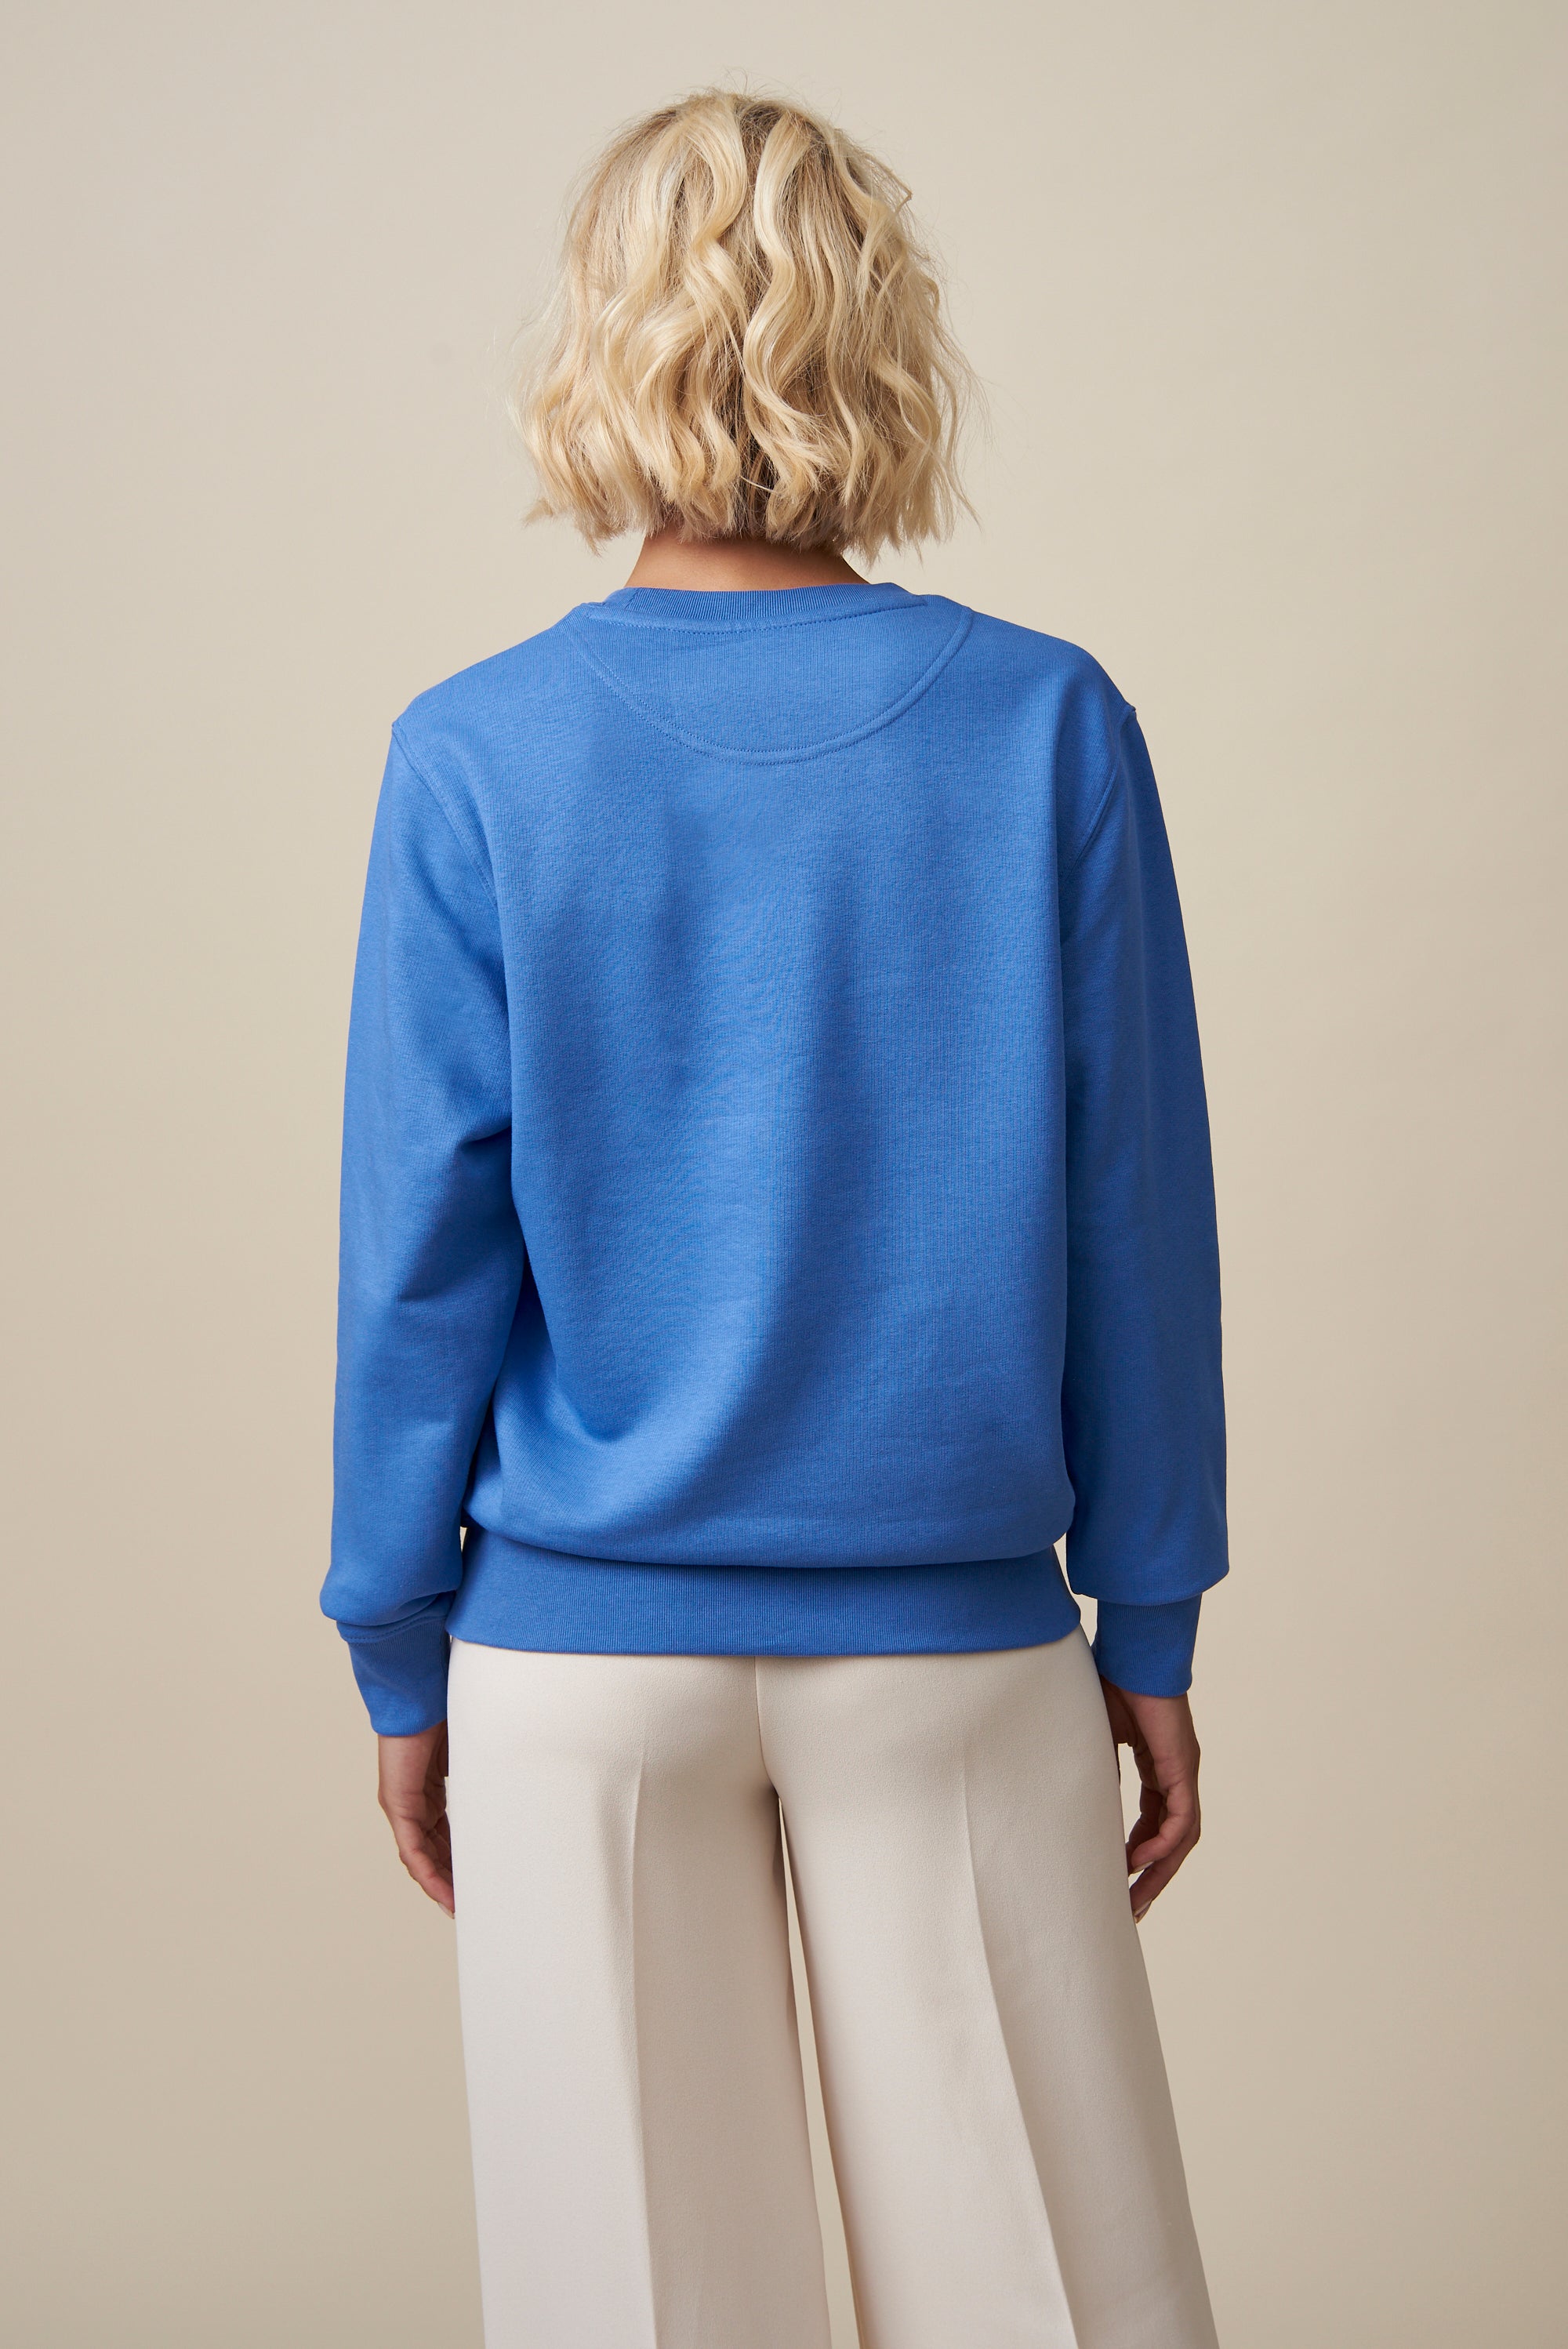 La Destinée Sweatshirt - Blau/Weiß